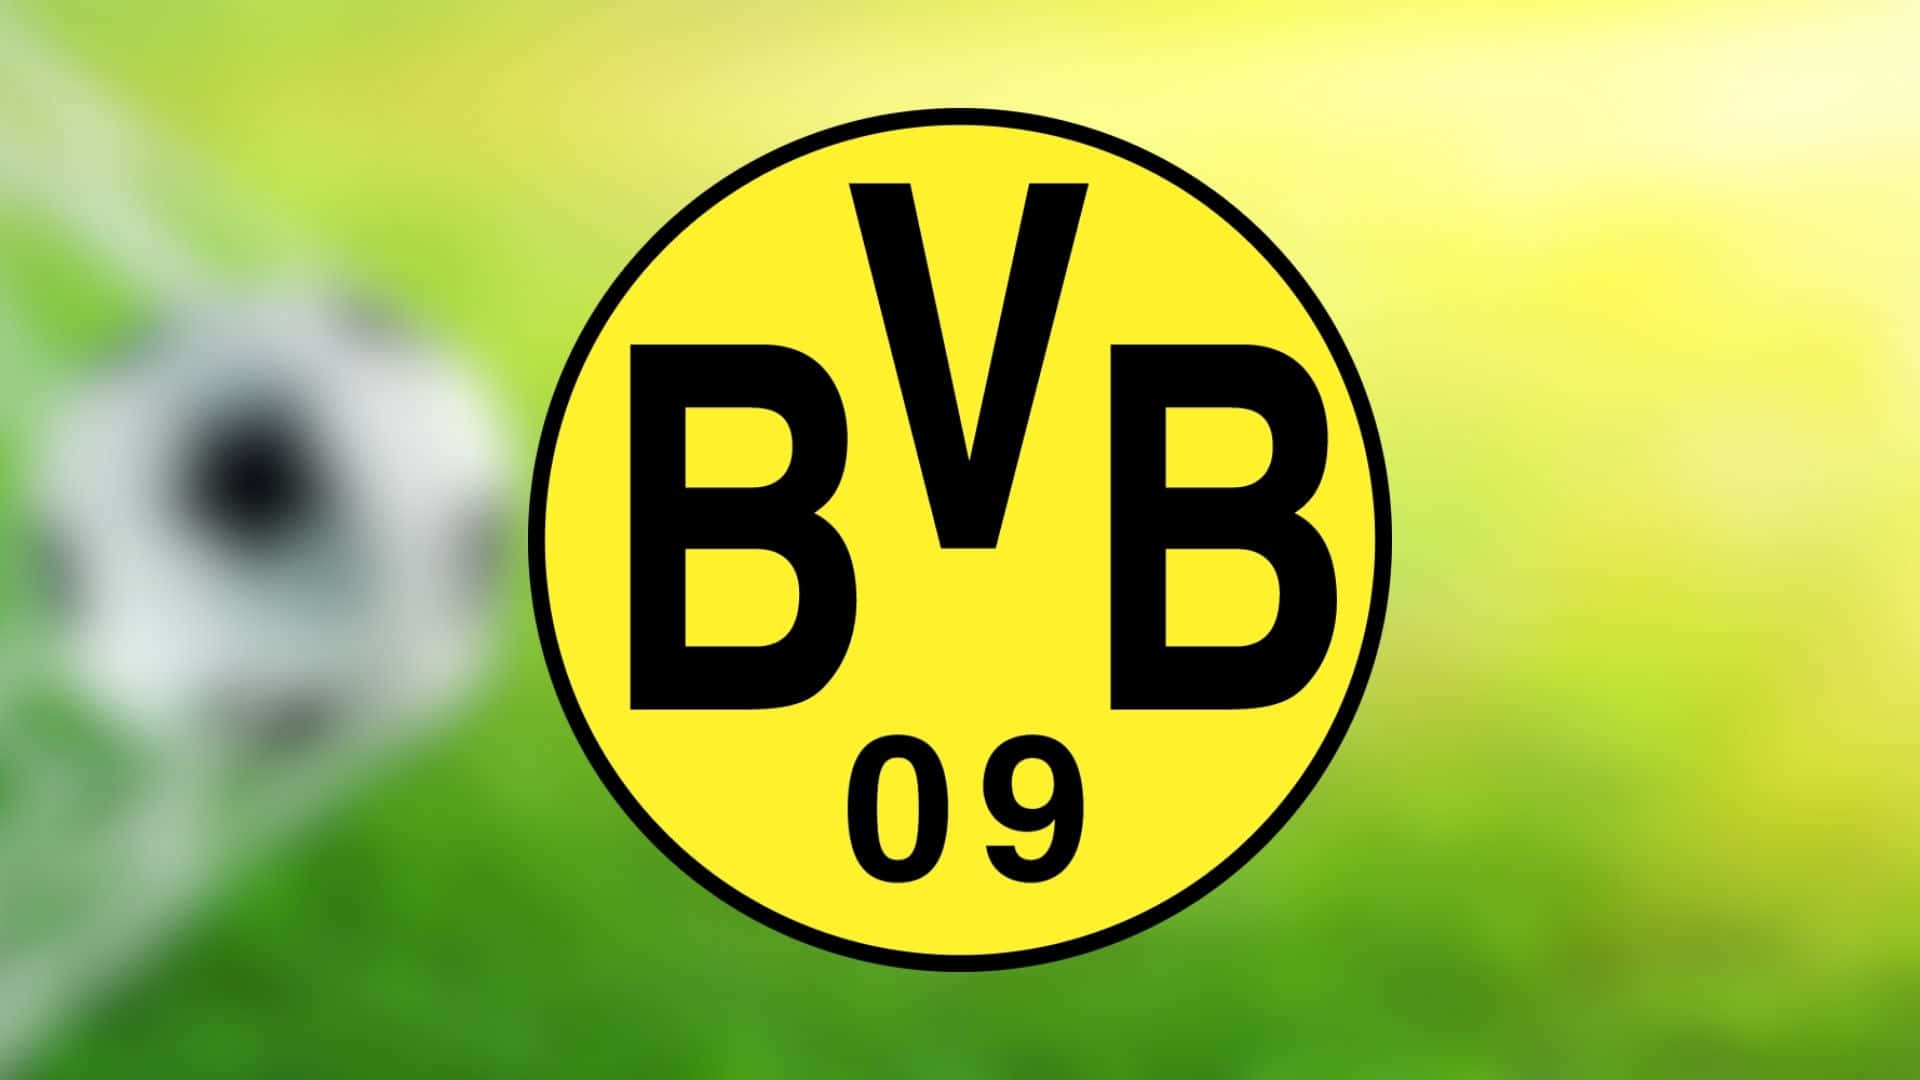 Bvb09 Logo Auf Einem Grünen Feld Wallpaper